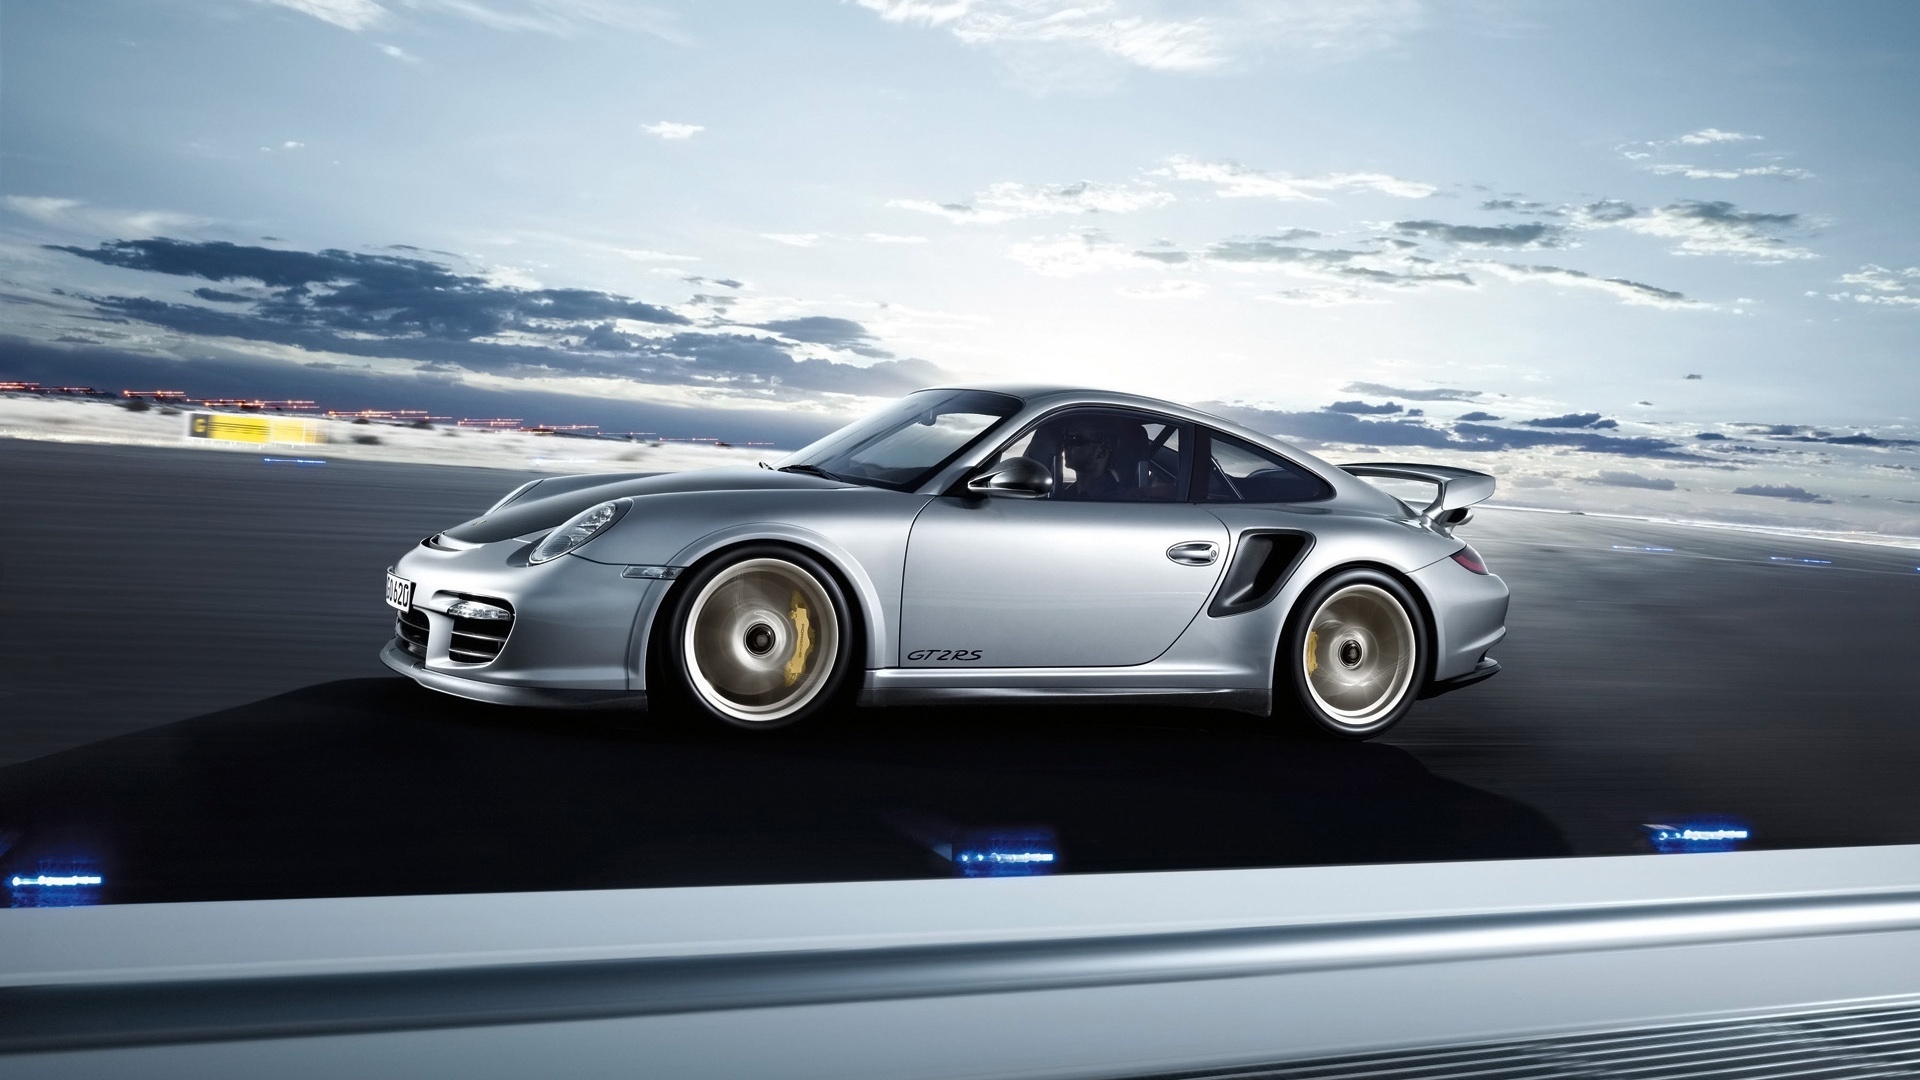 Porsche 911 GT2 RS 2011 Speed for 1920 x 1080 HDTV 1080p resolution